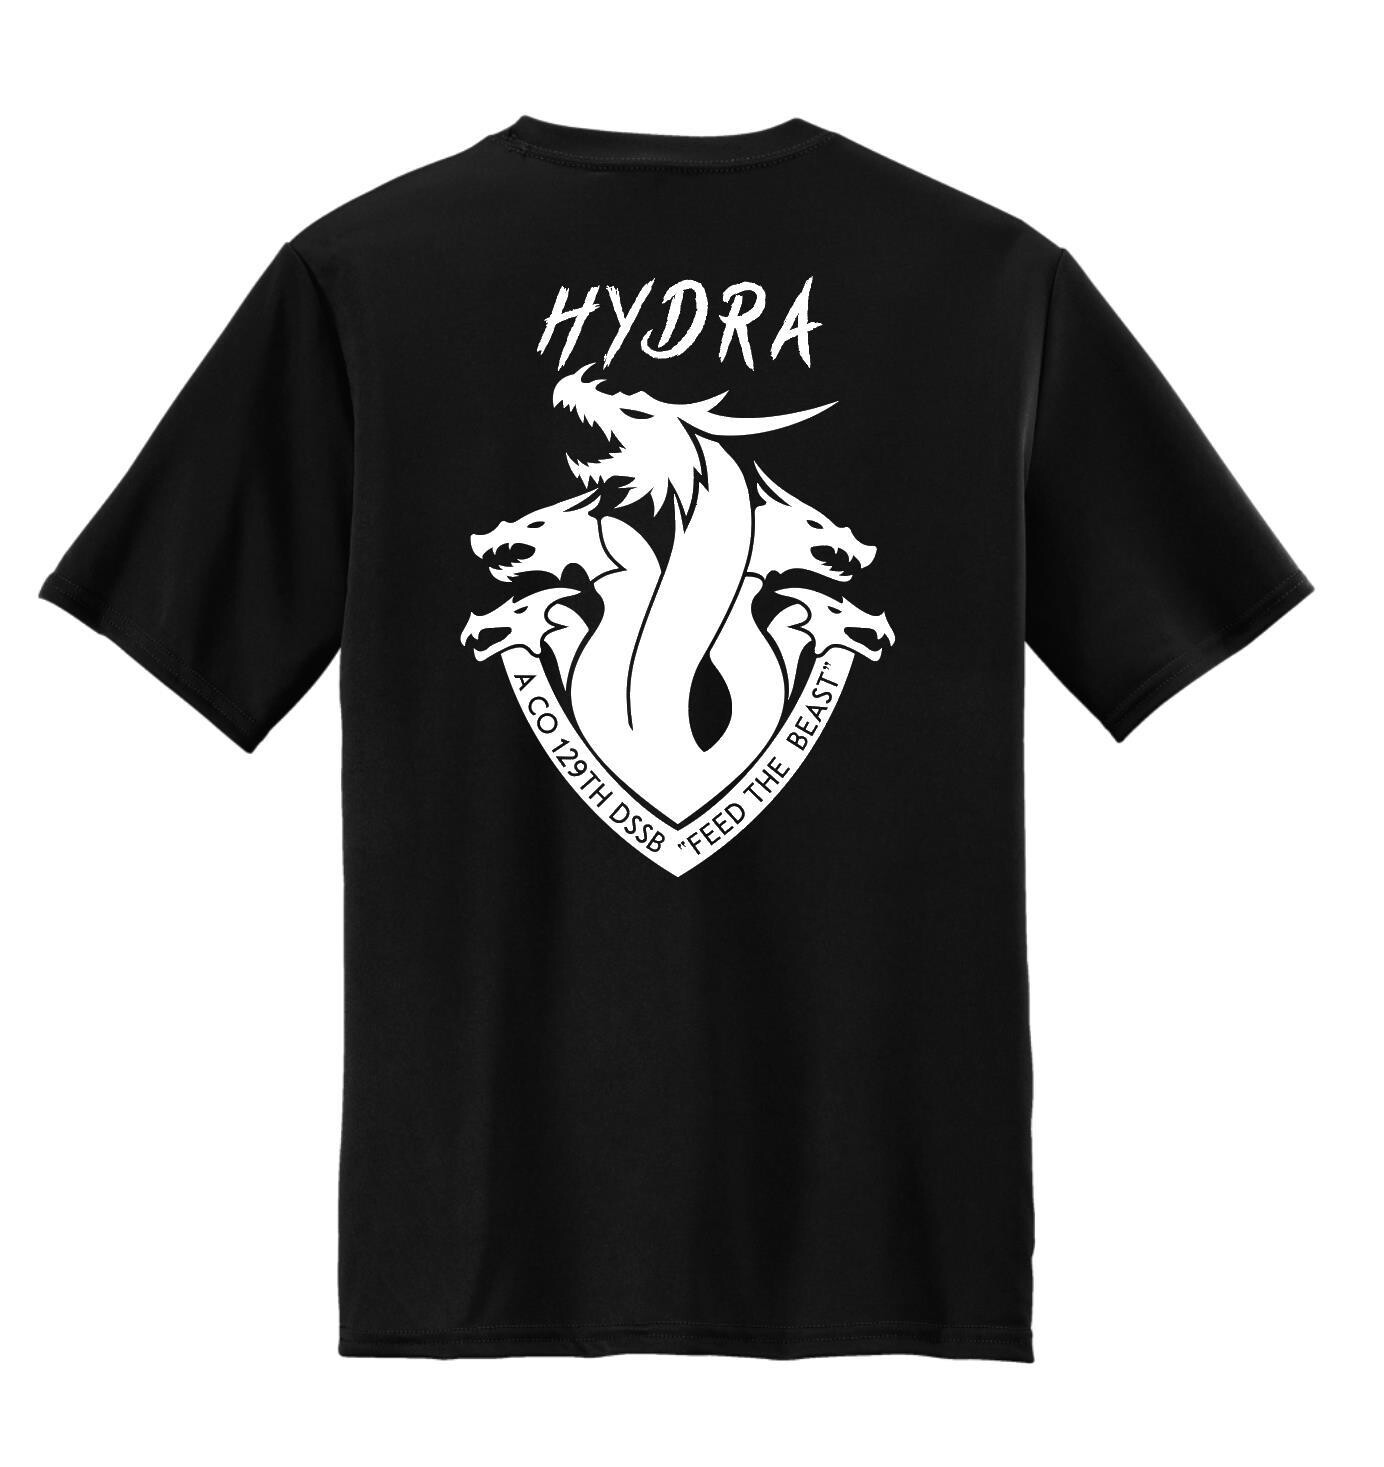 A Co "Hydra" 129th DSSB PT Shirt